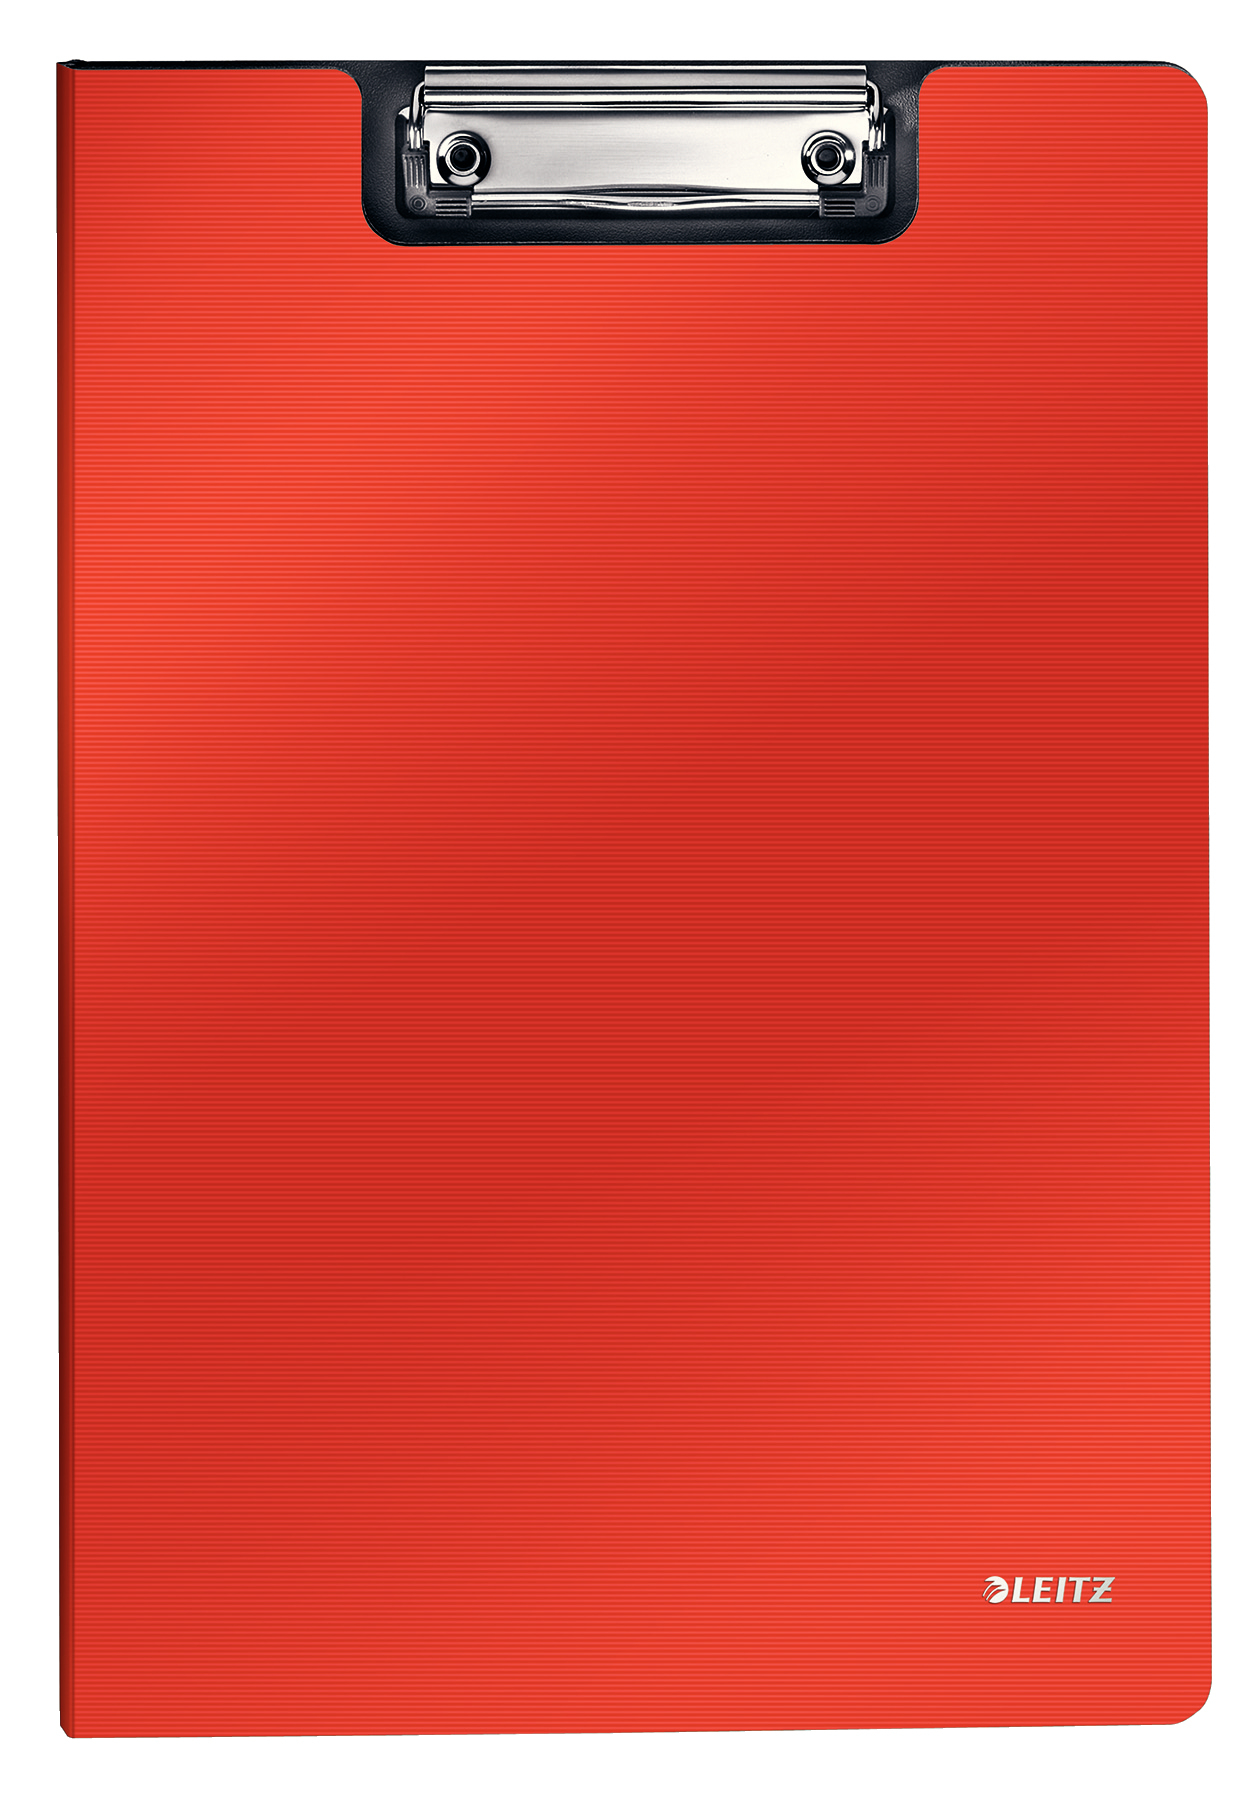 LEITZ Dossier à pince Solid PP A4 39621020 rouge clair rouge clair